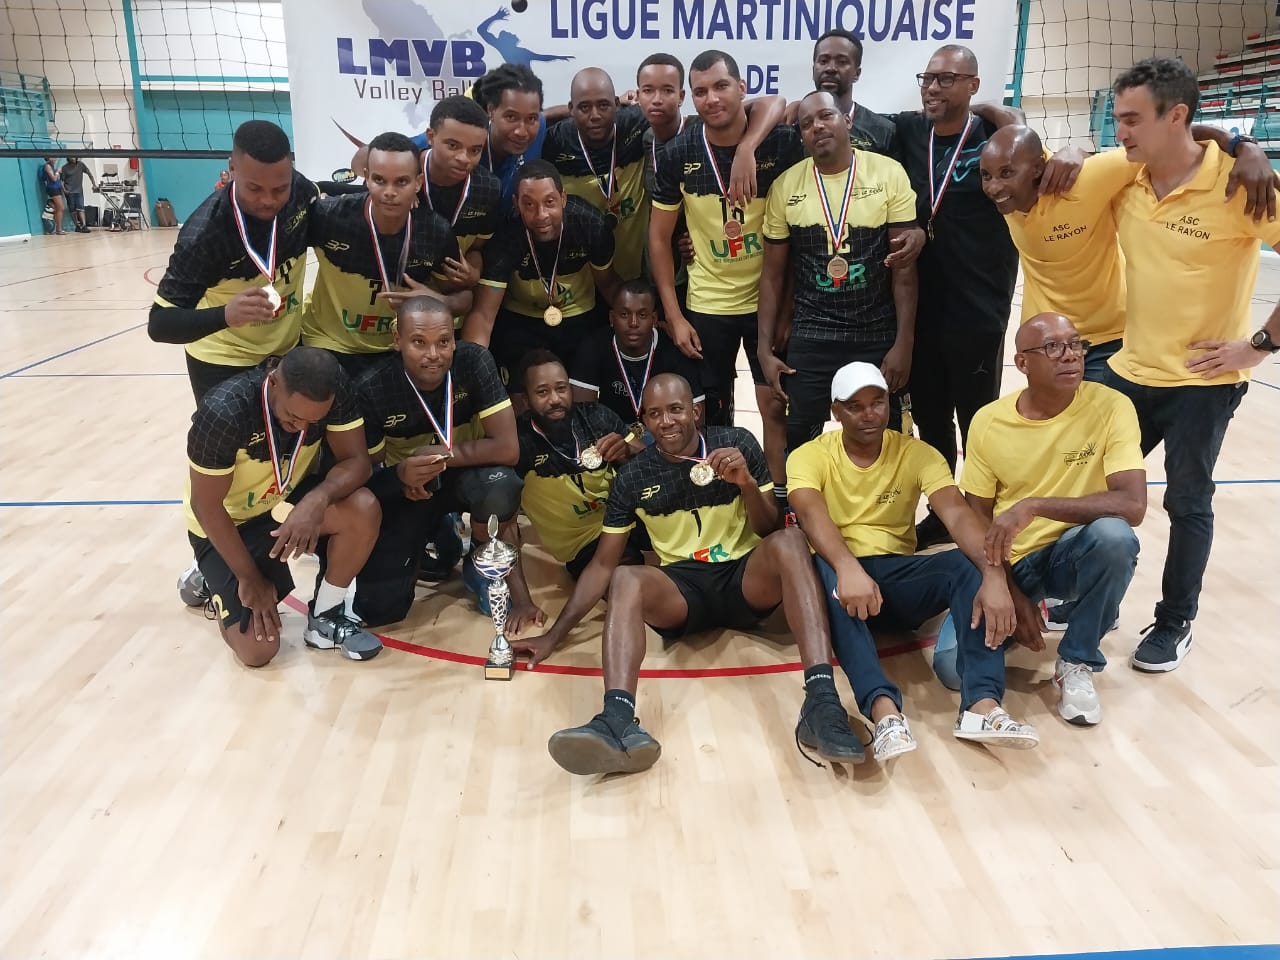     Volley-ball : le Rayon, champion de Martinique

